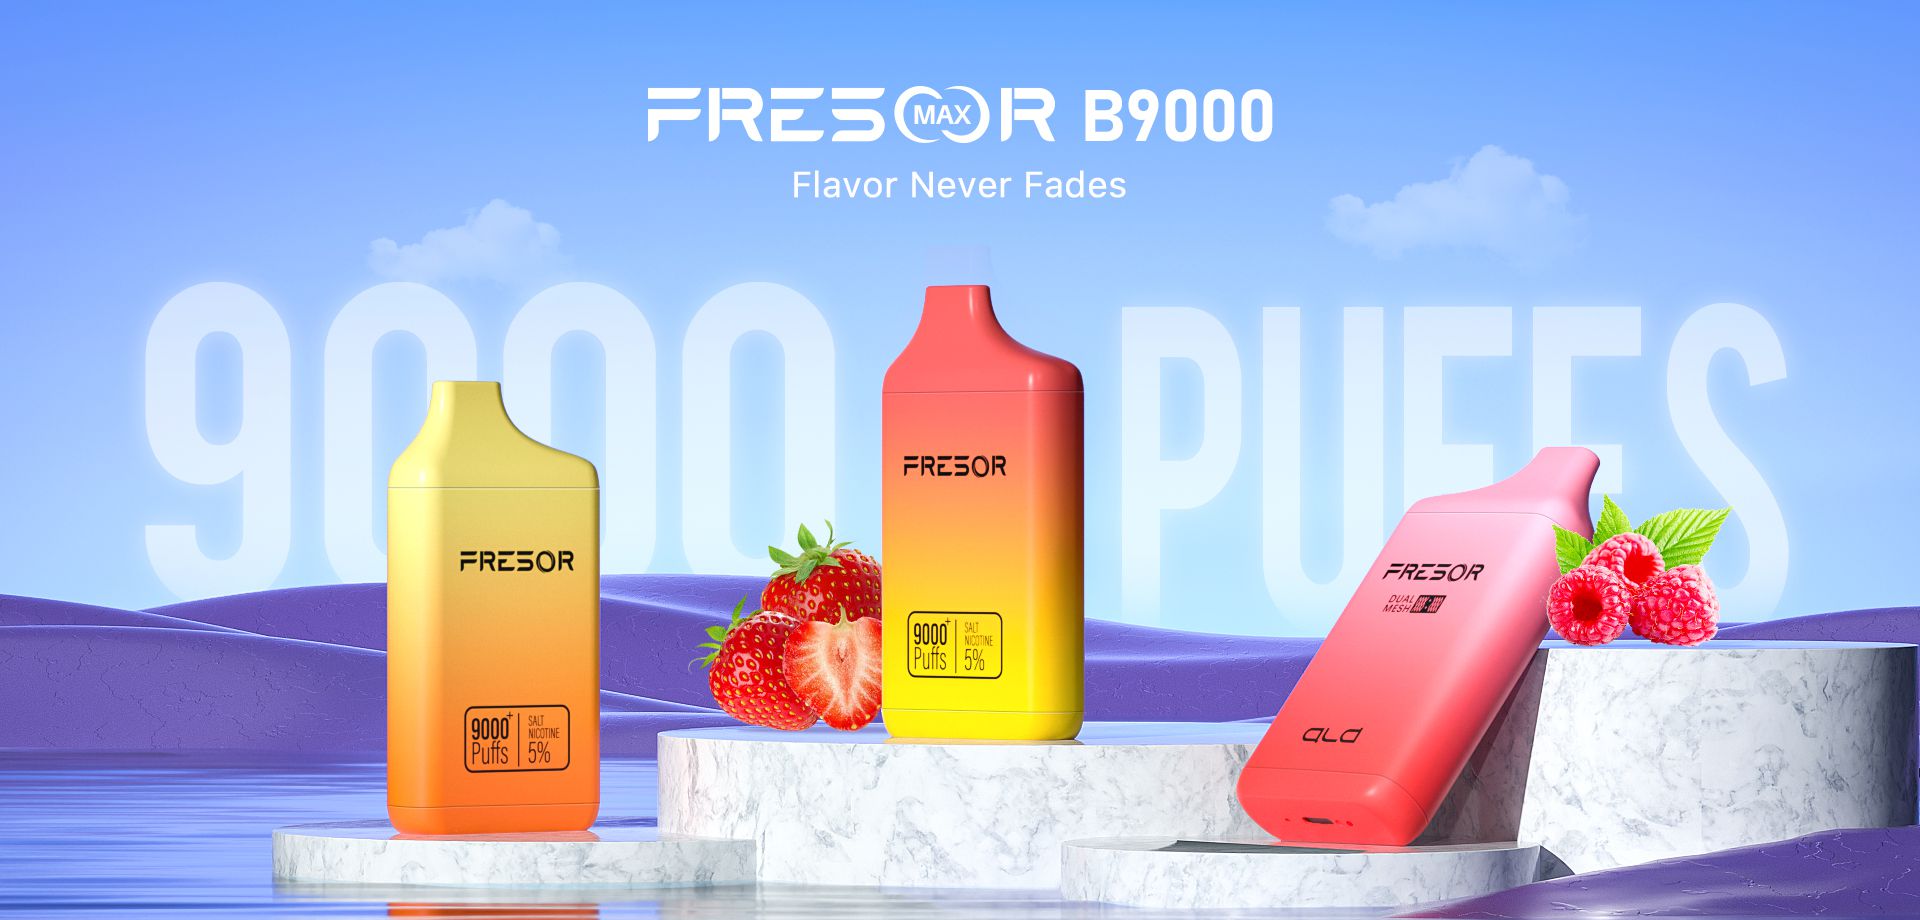 B9000 Flavor Never Fade